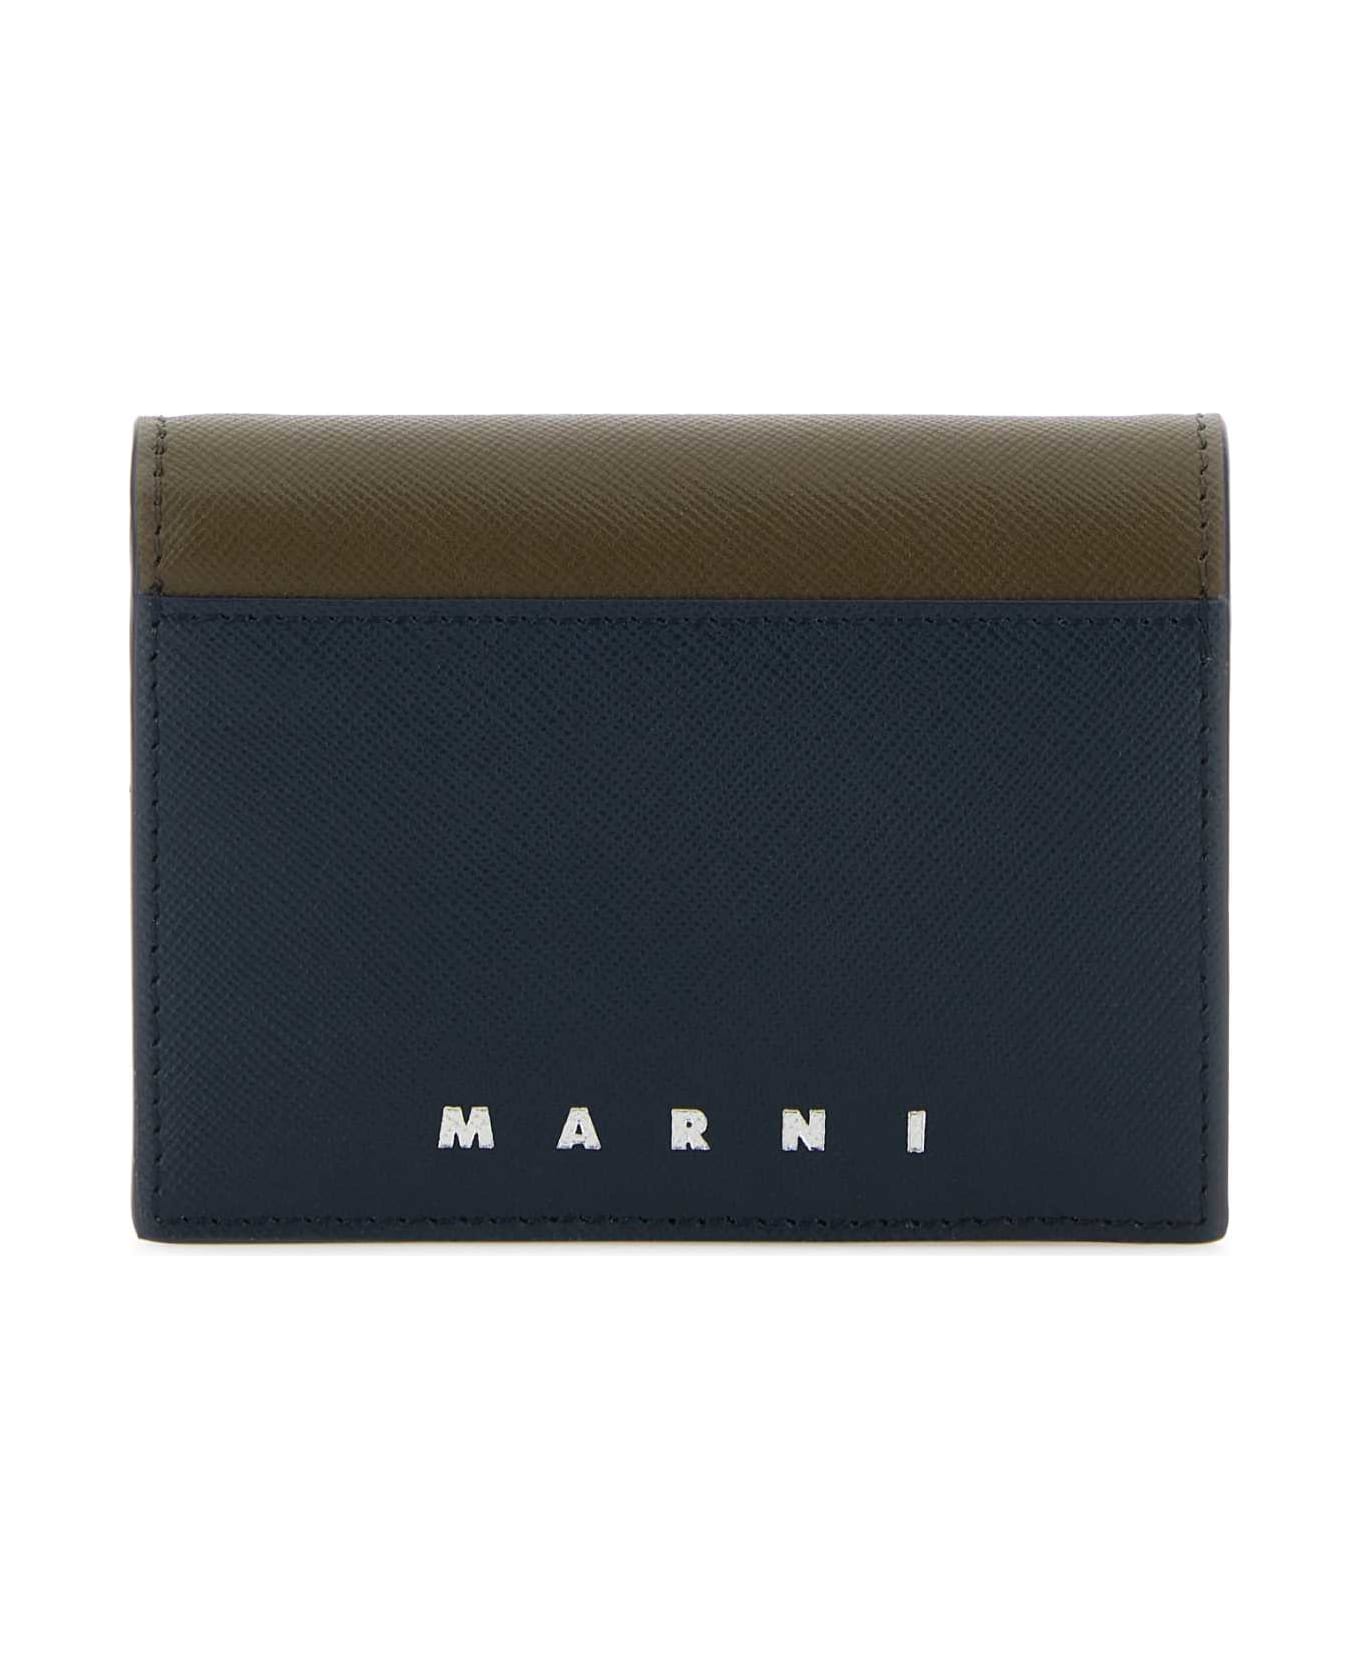 Marni Two-tone Leather Wallet - NIGHTBLUEDUSTYOLIVE